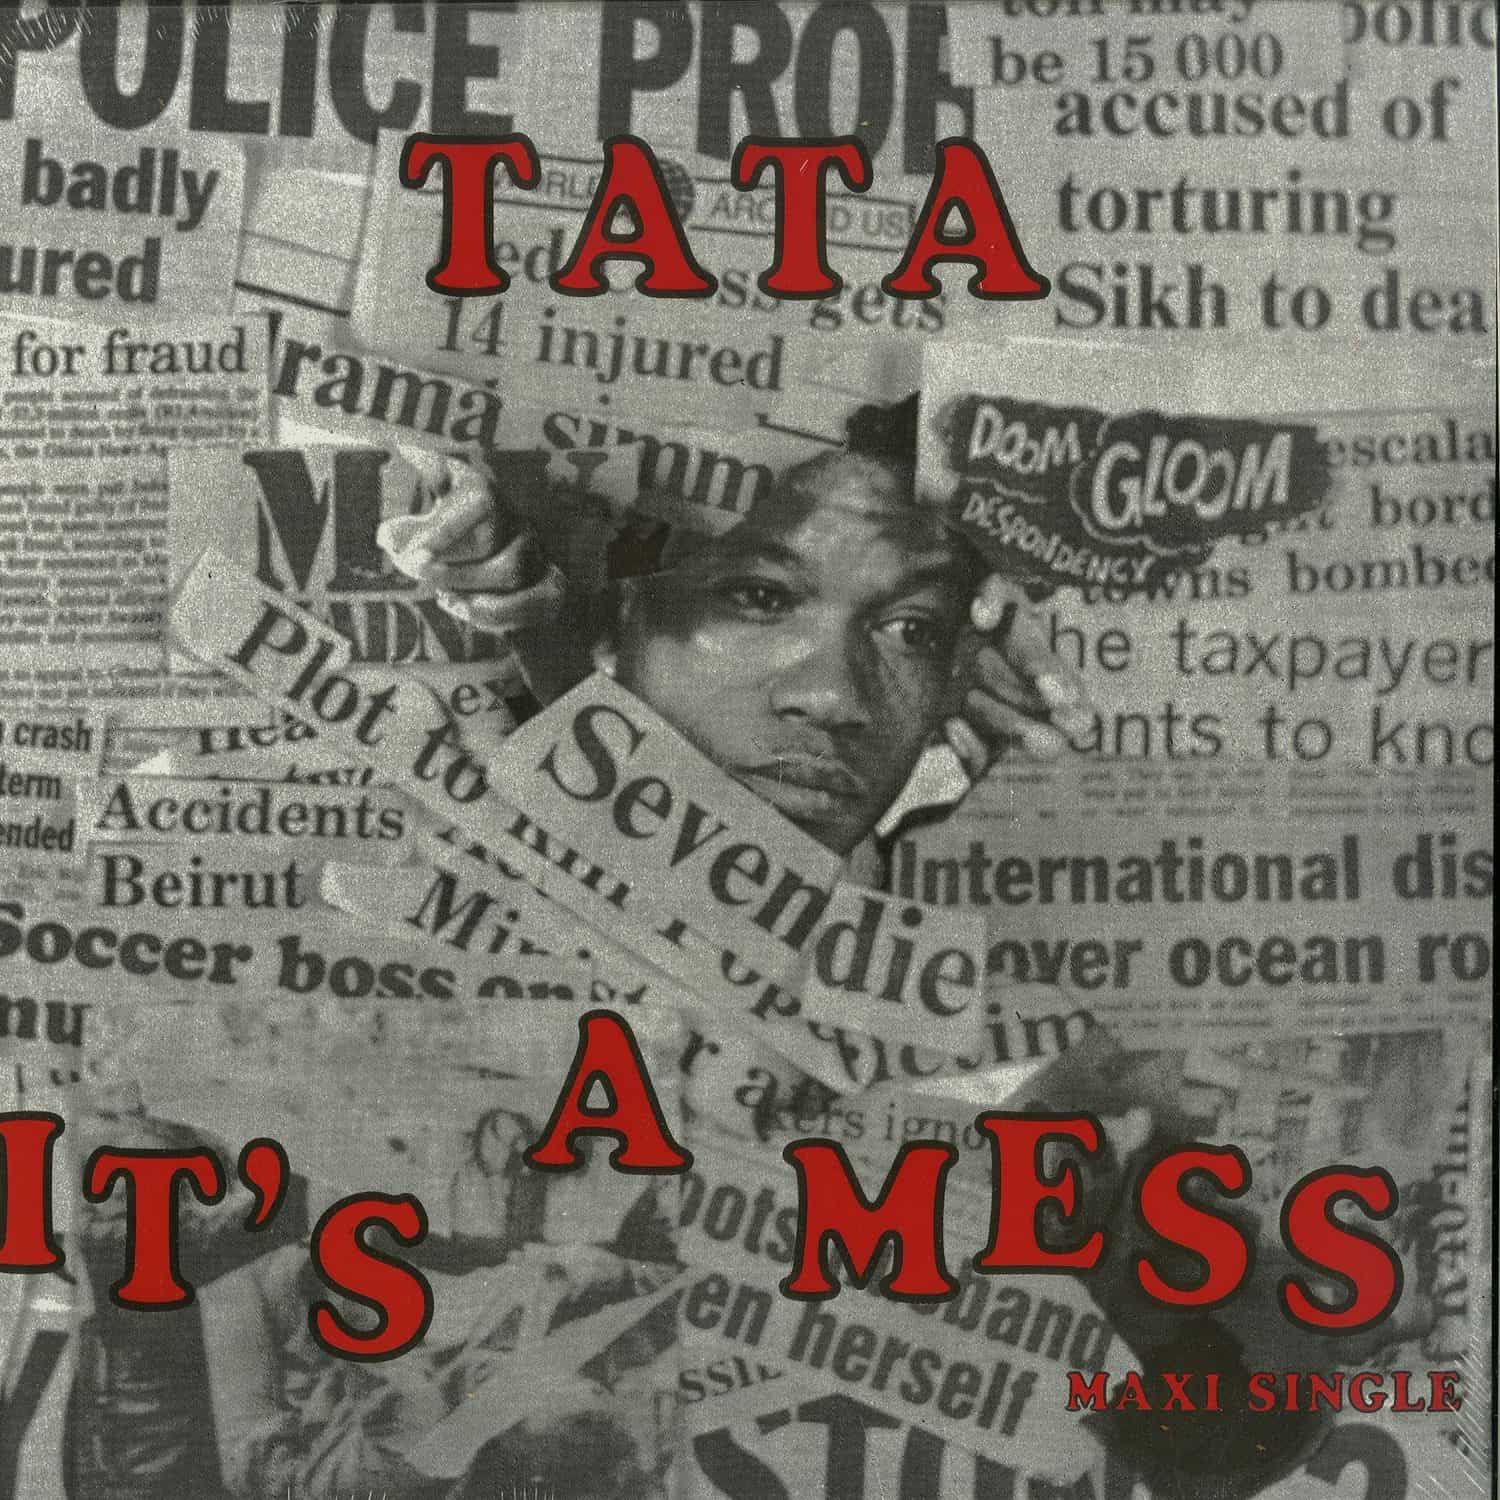 Tata - ITS A MESS